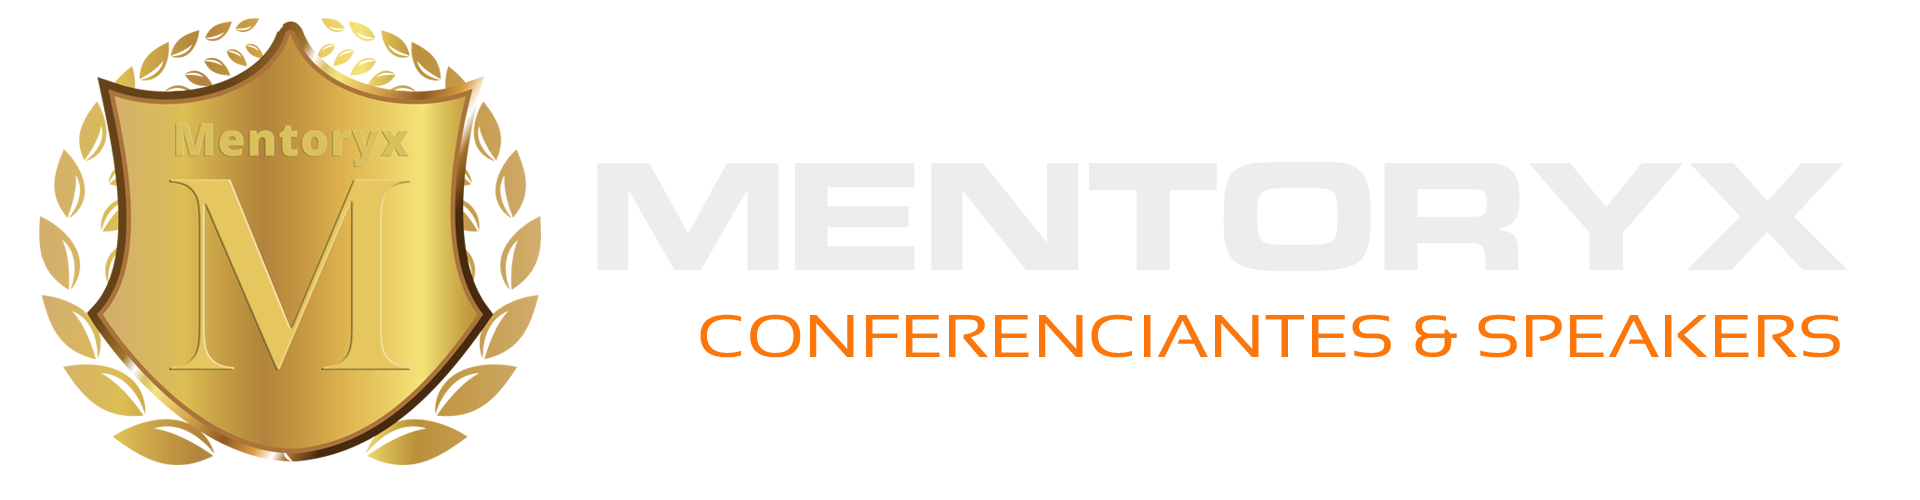 Logo mentoryx